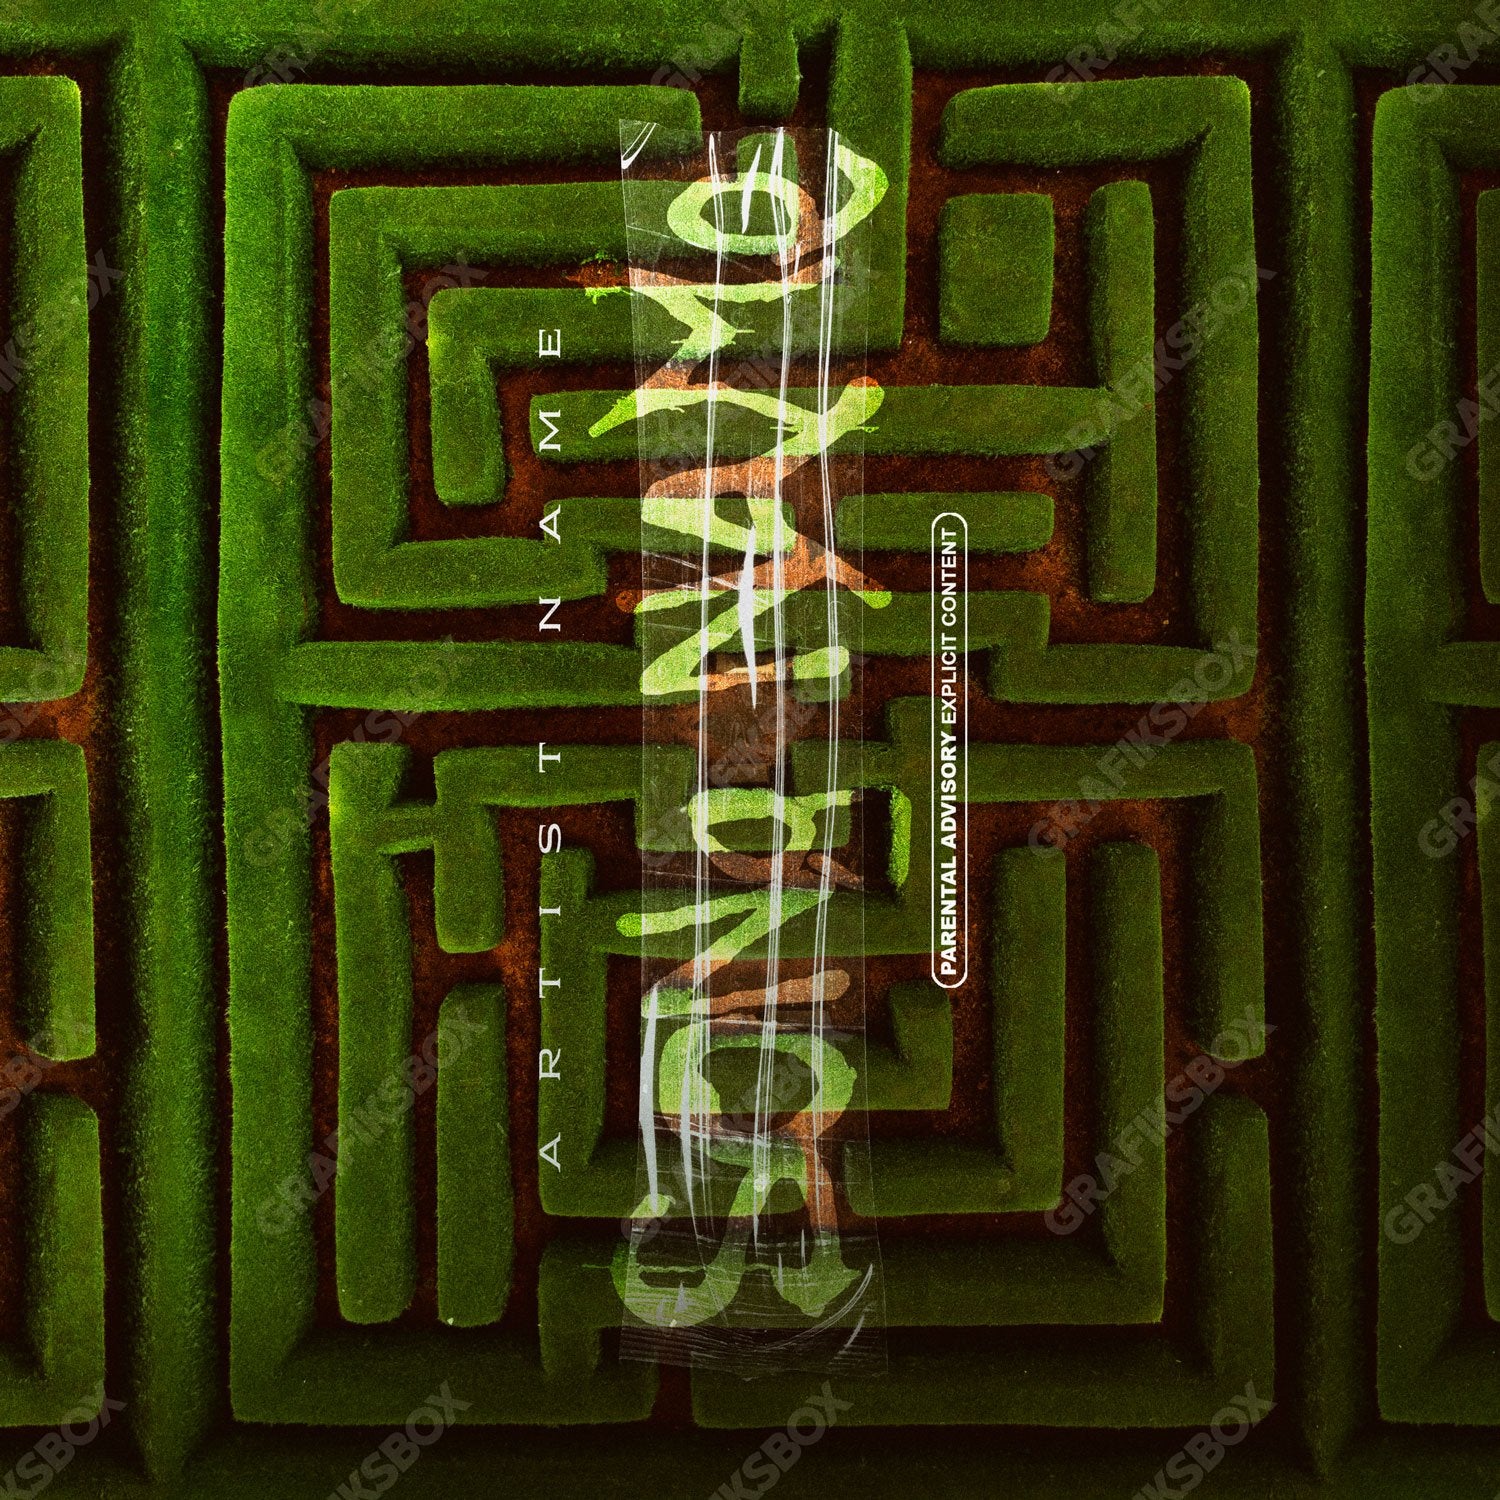 Labyrinth premade cover art